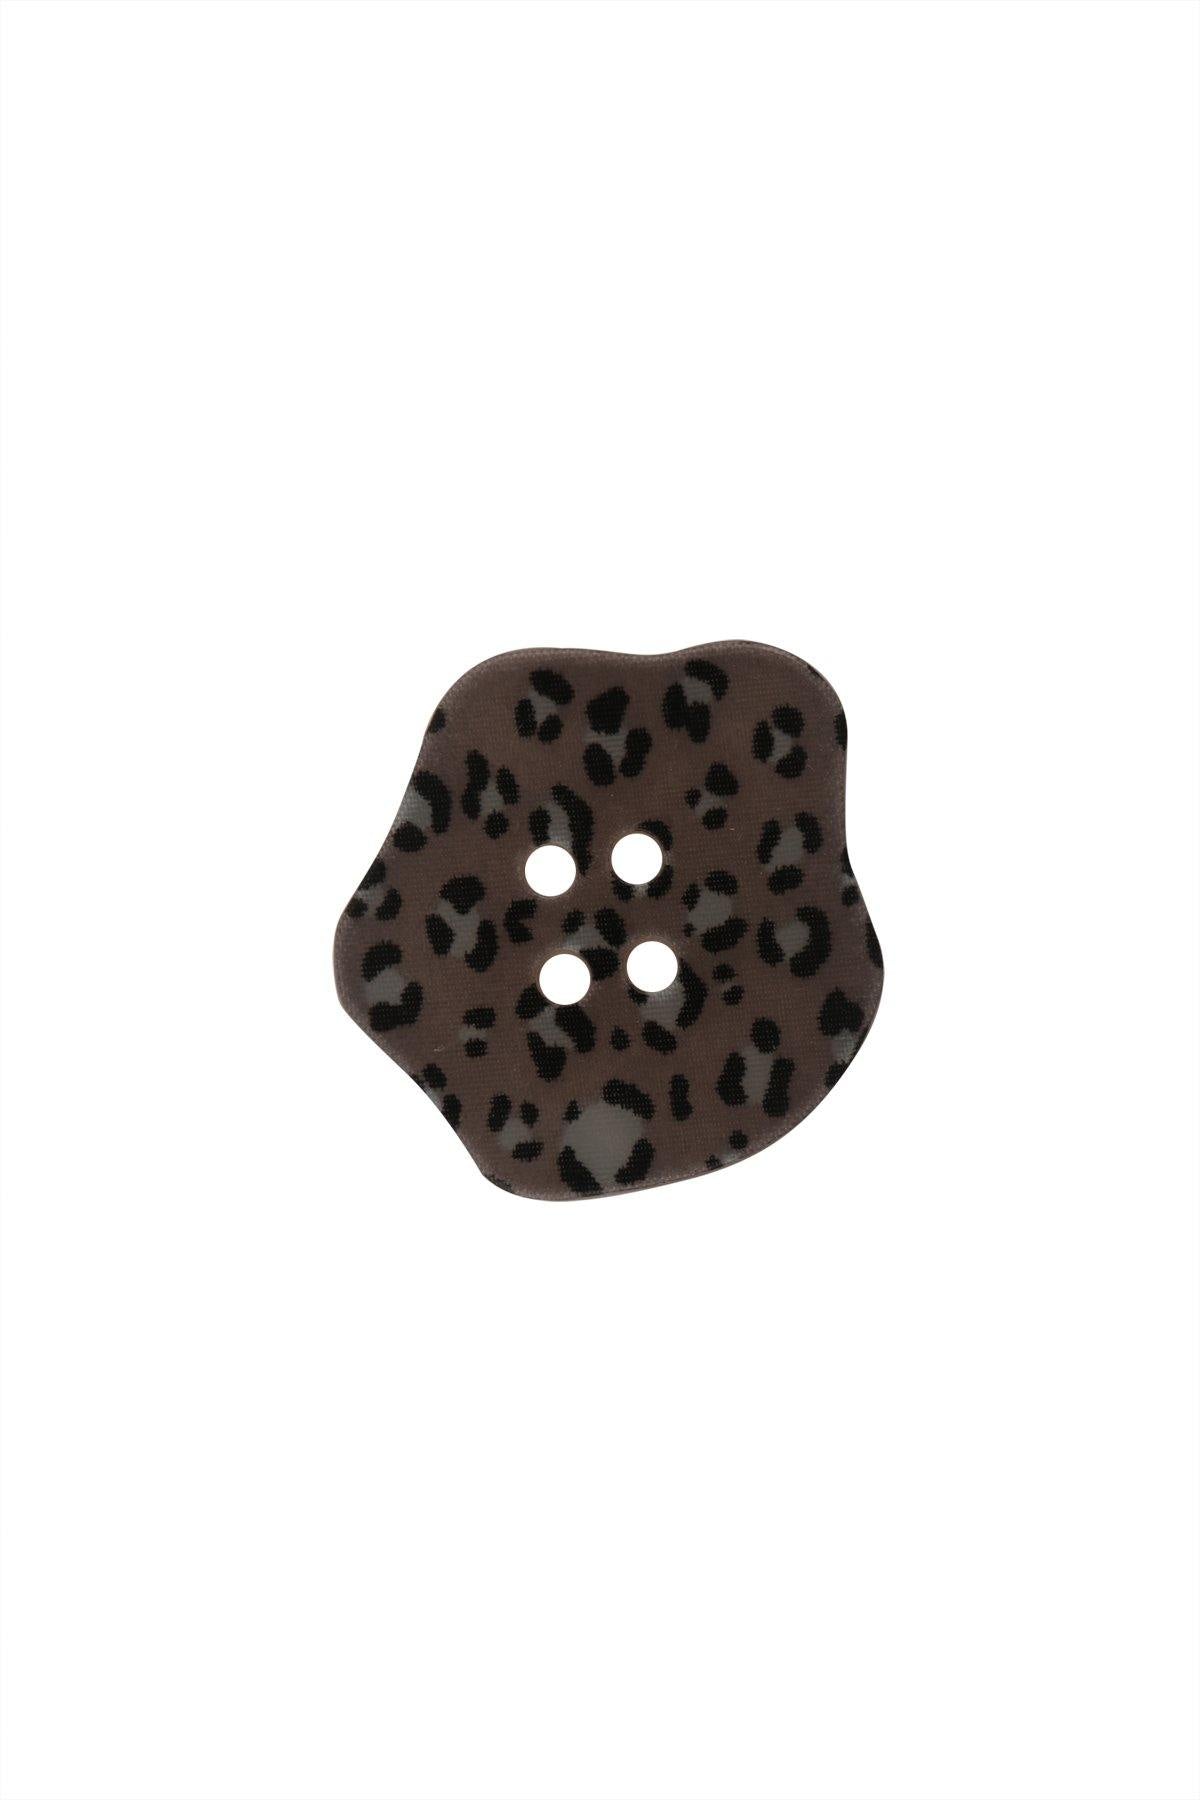 Organic Shape Leopard Print 4-Hole Acrylic Button